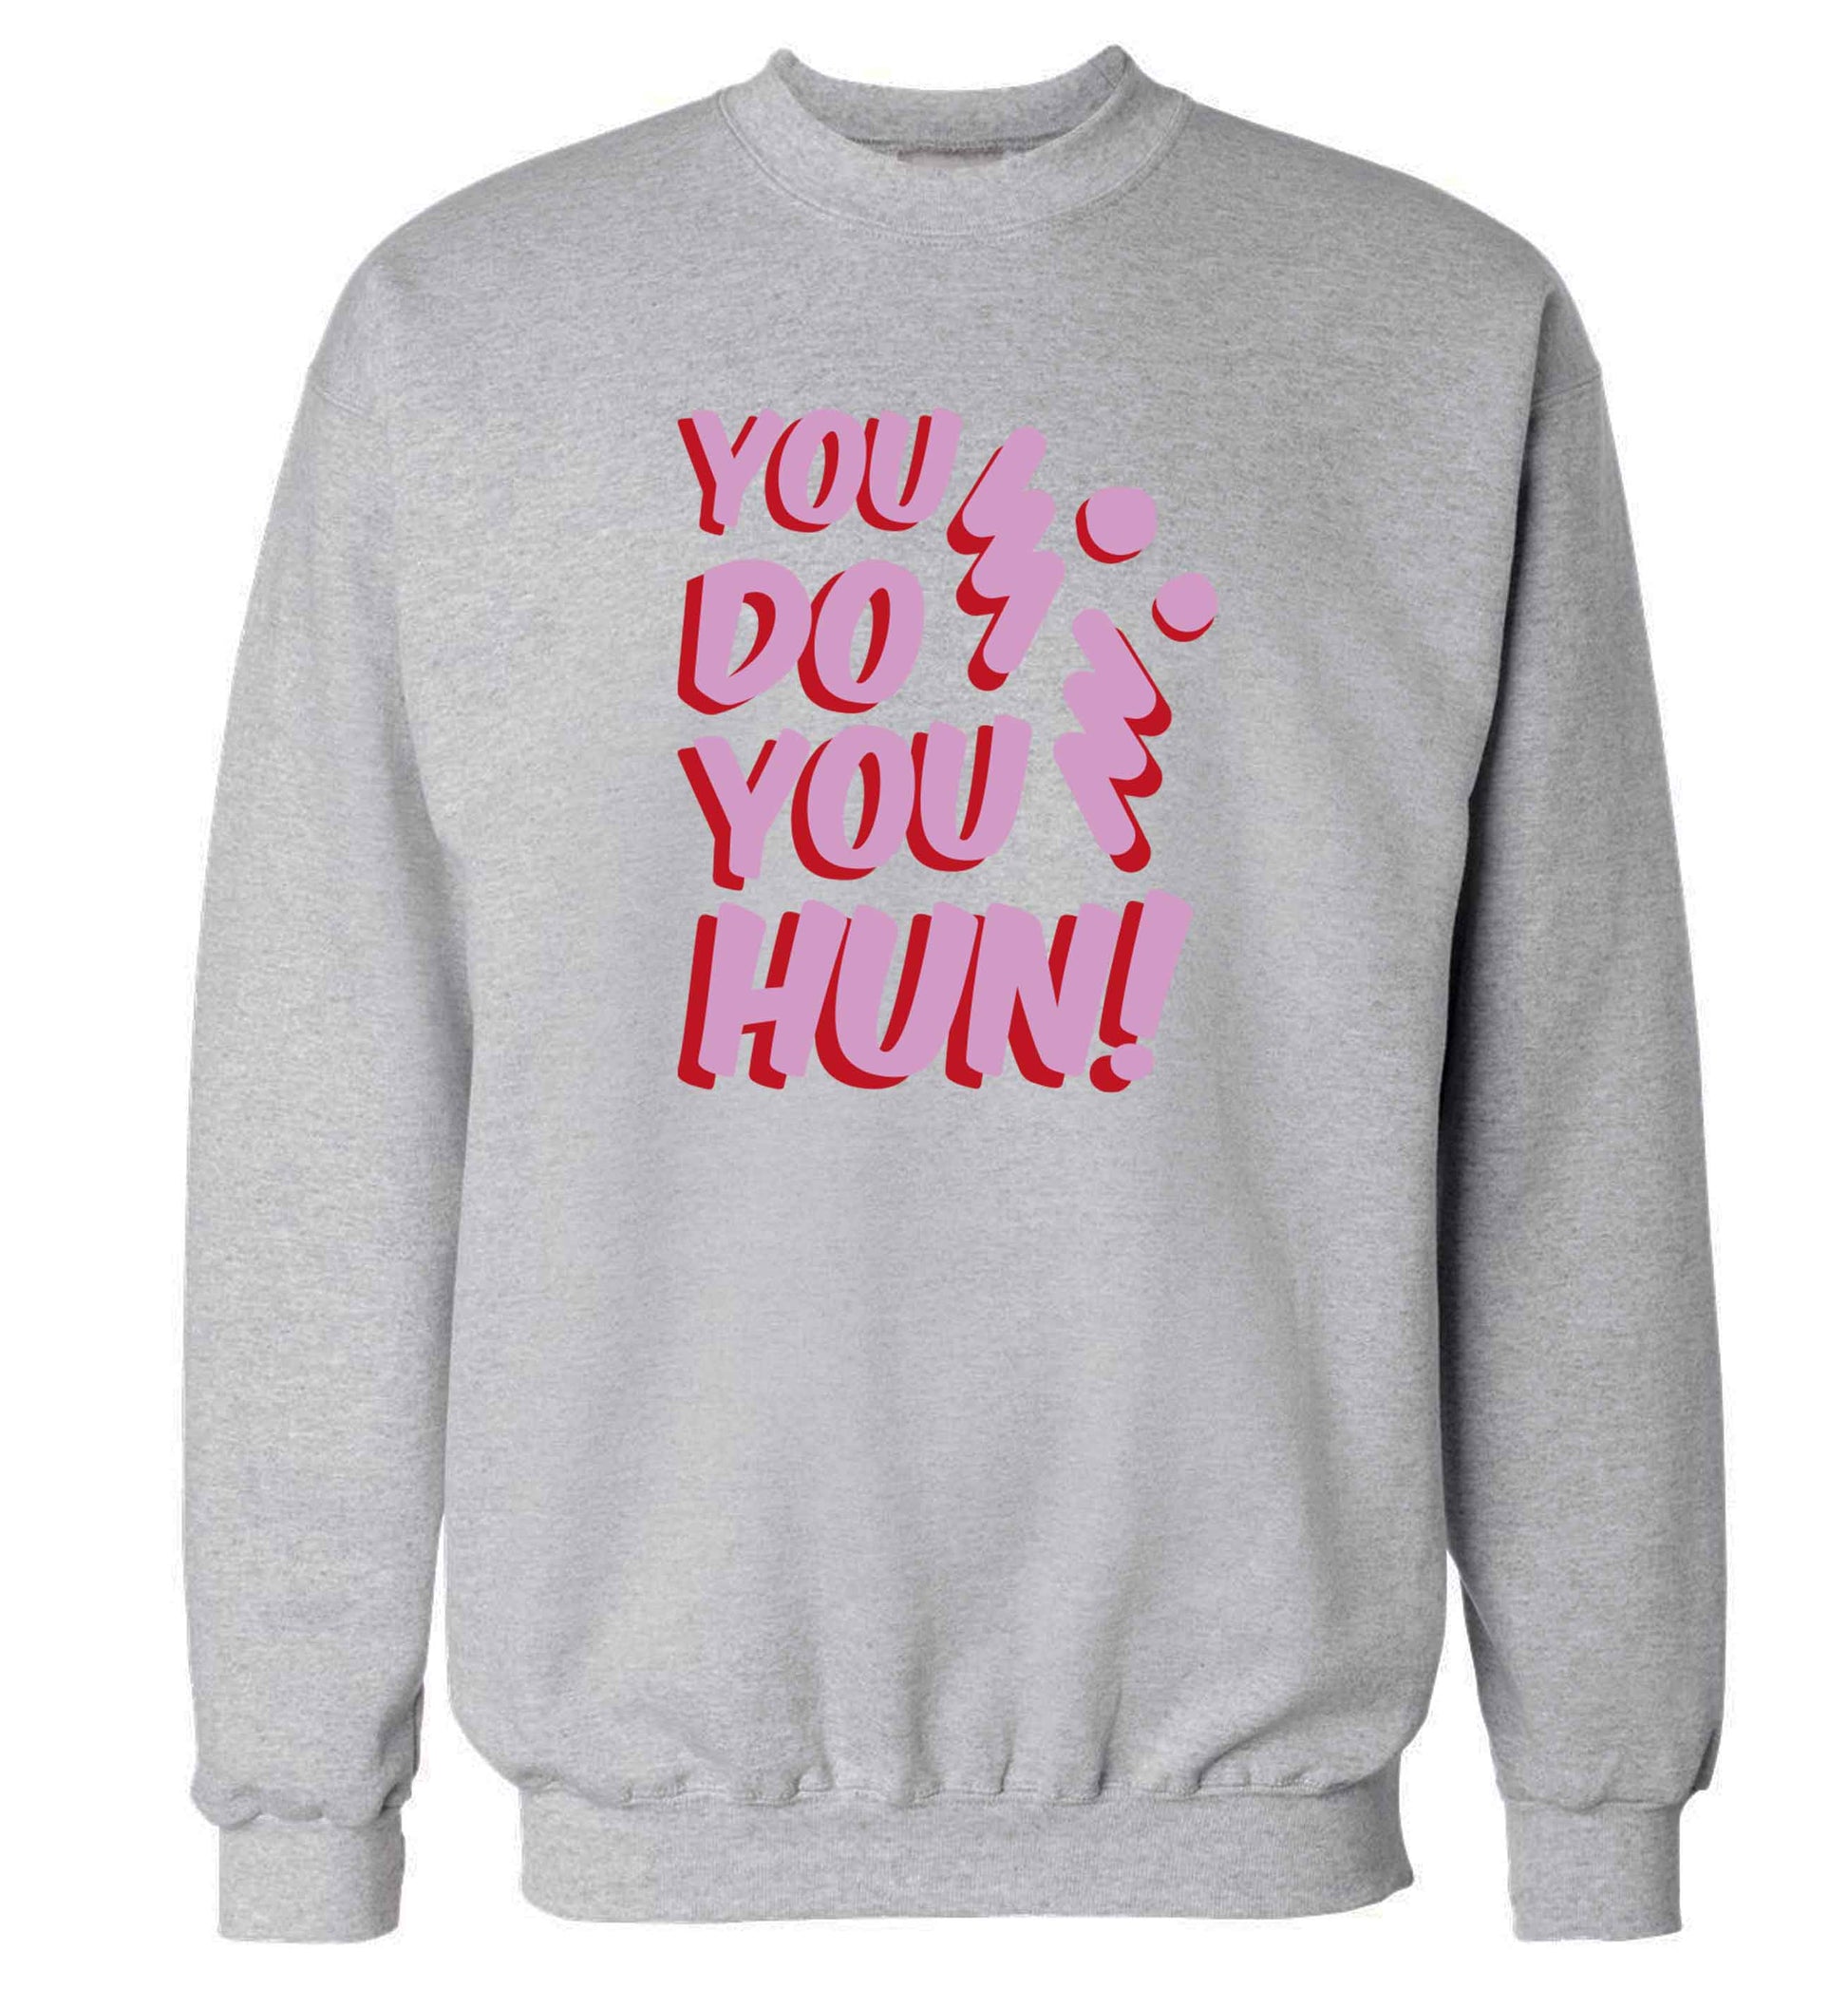 You do you hun adult's unisex grey sweater 2XL